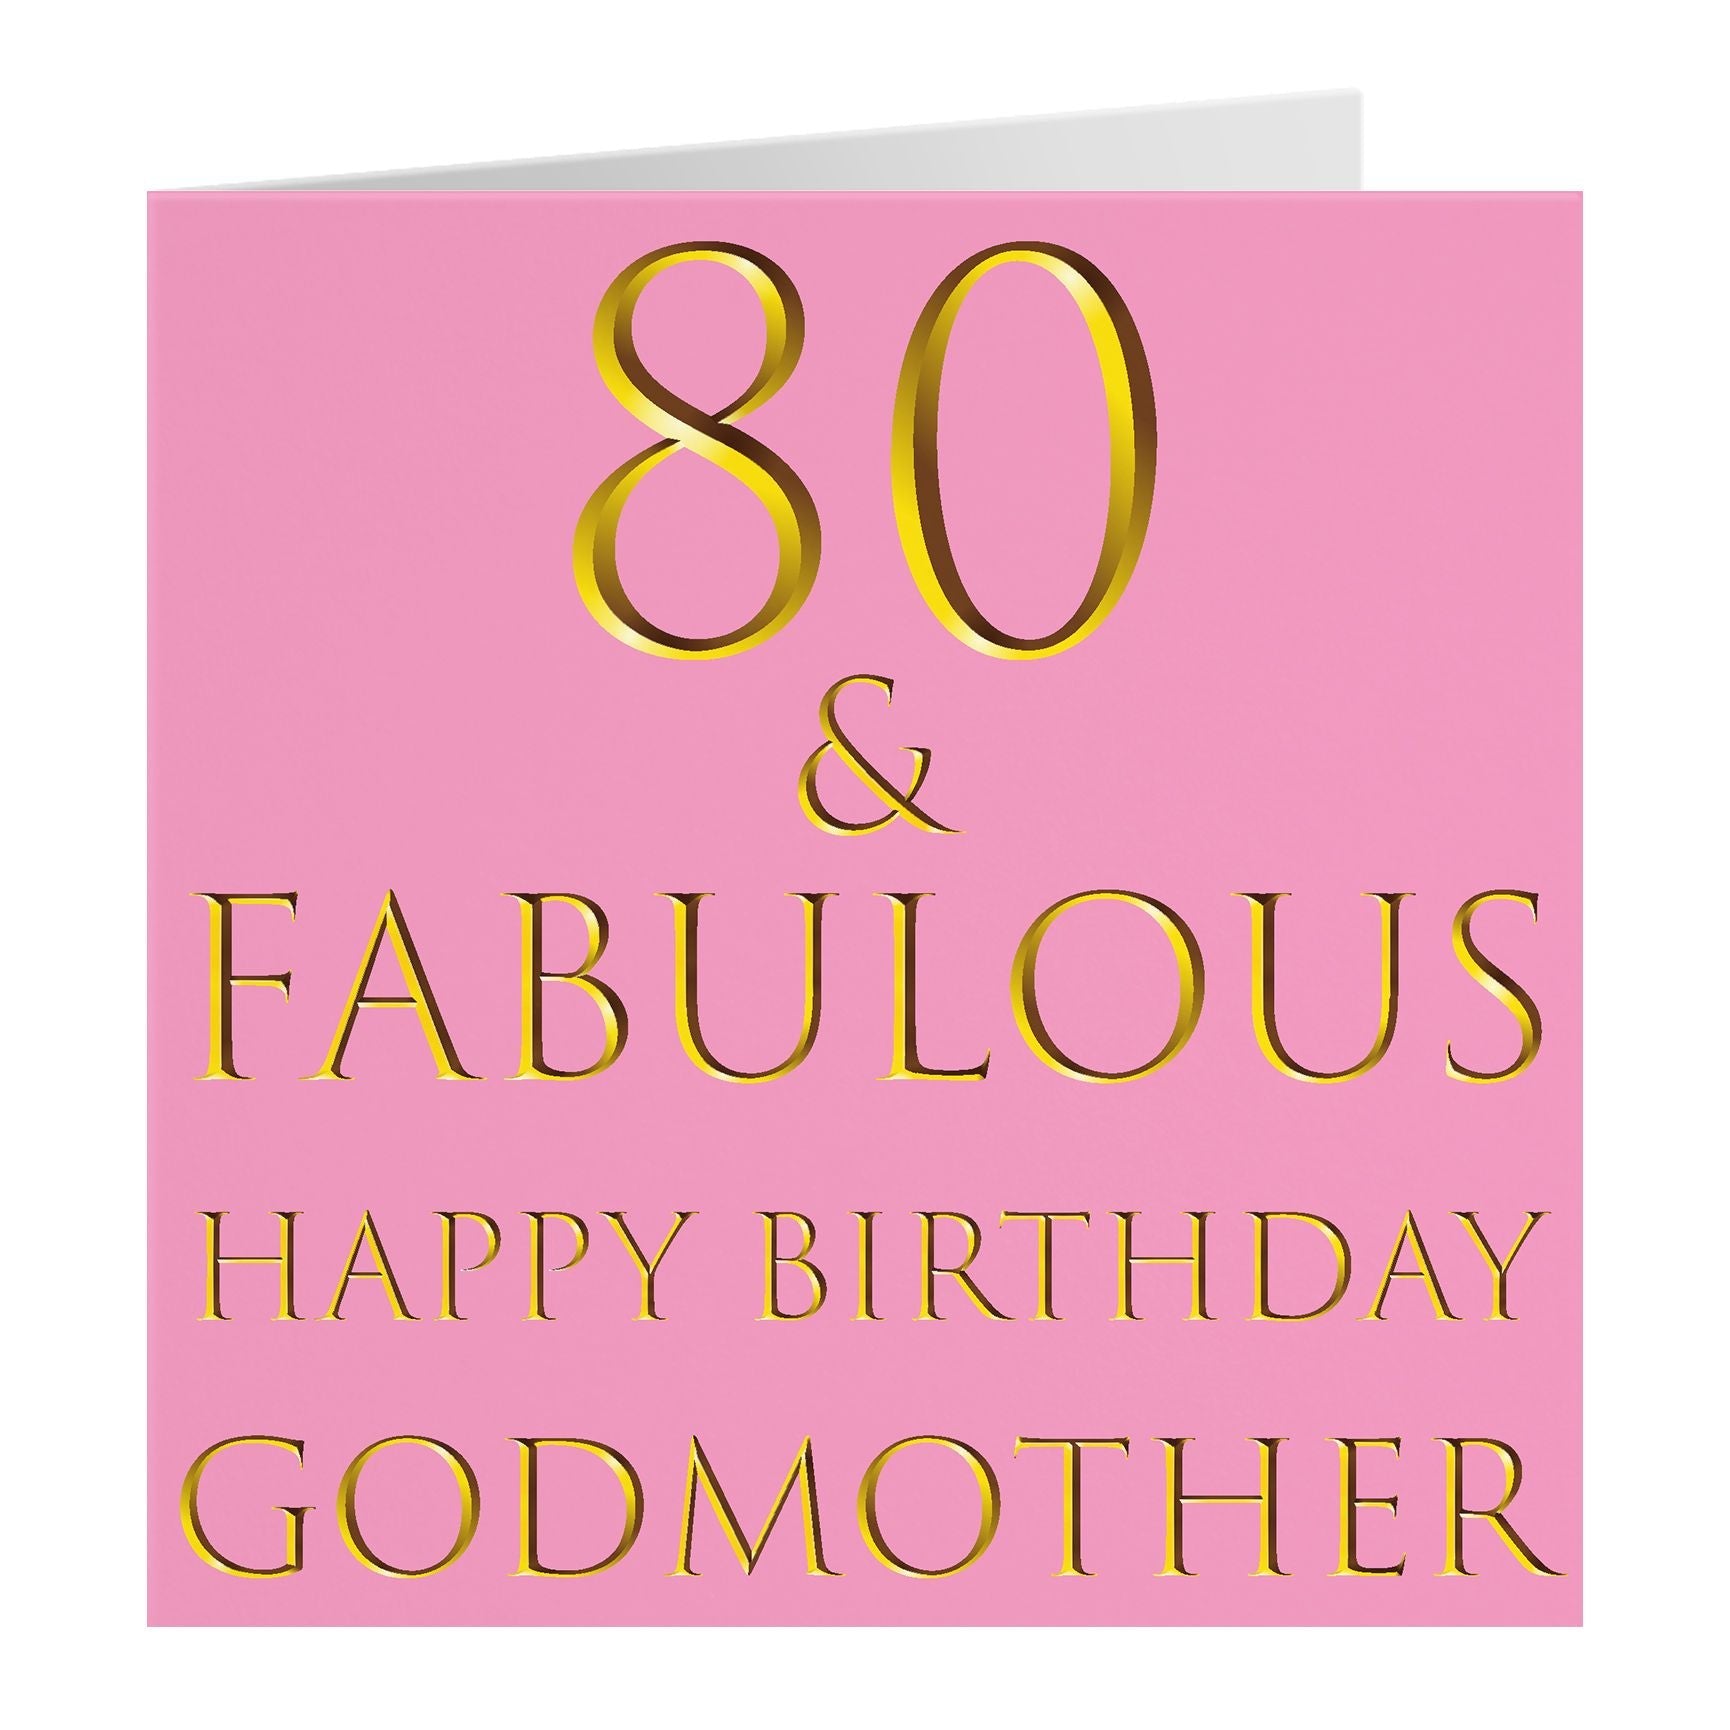 Godmother Birthday Cards - Hunts England